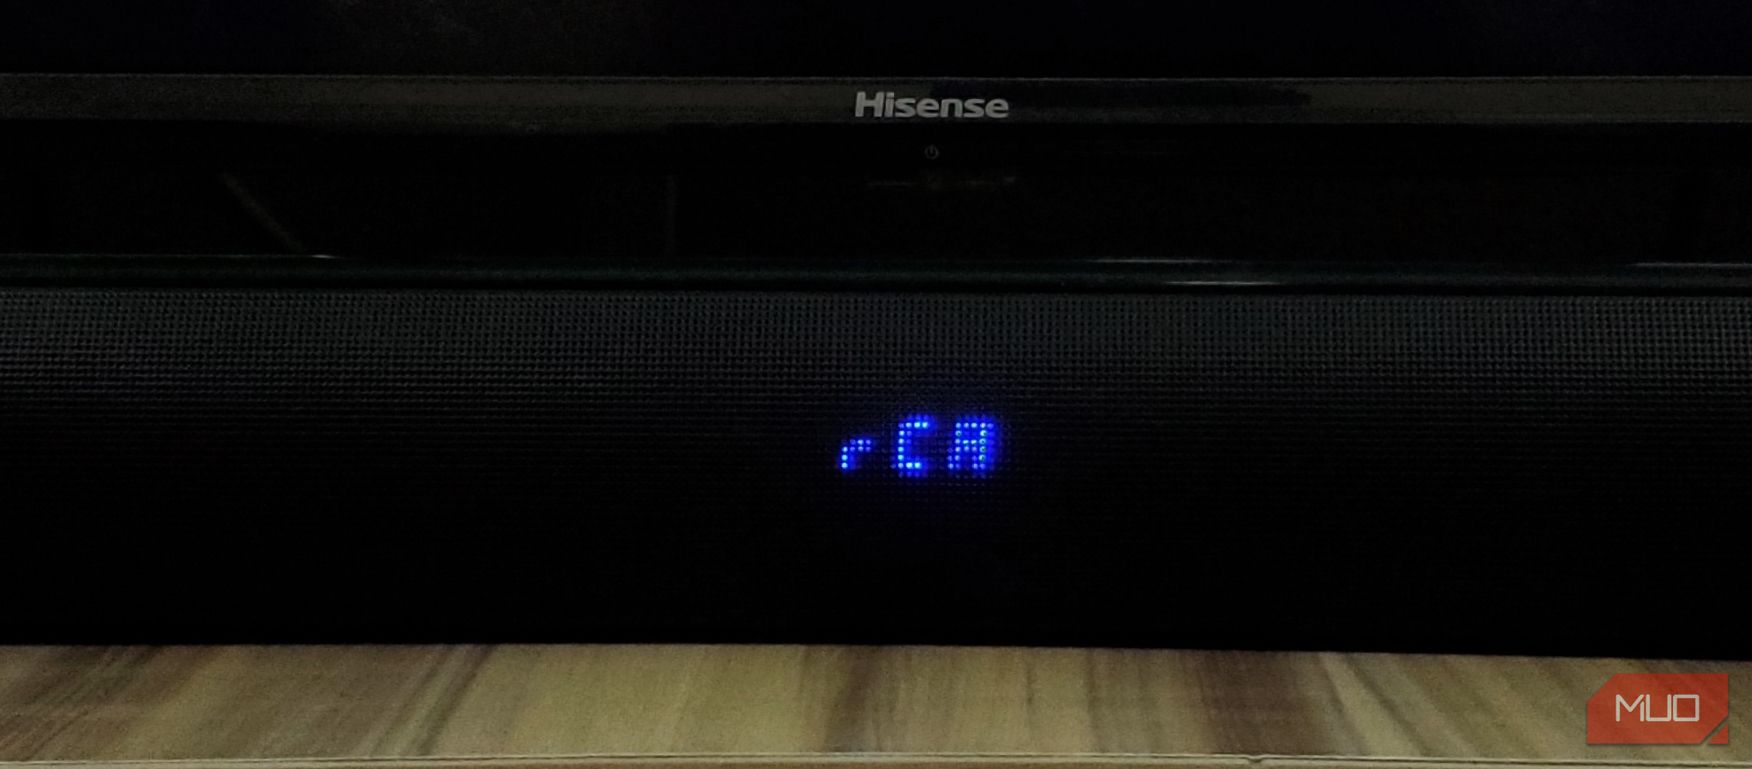 RCA indicator on Hisense Soundbar